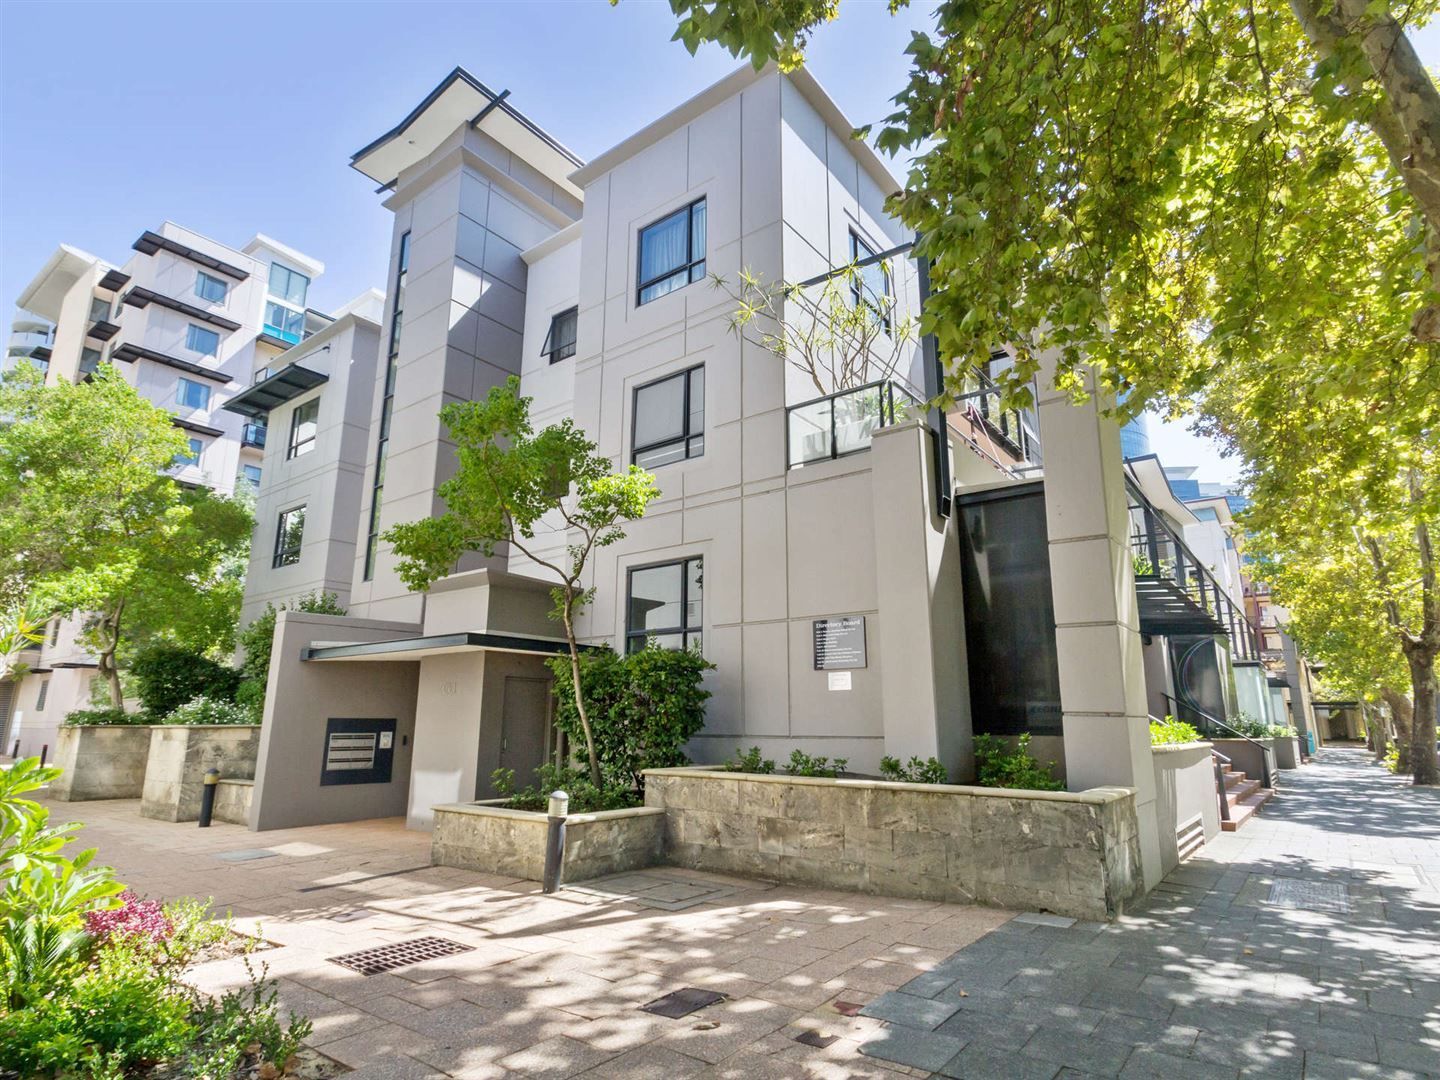 2 bedrooms Apartment / Unit / Flat in 26/116 Mounts Bay Road PERTH WA, 6000